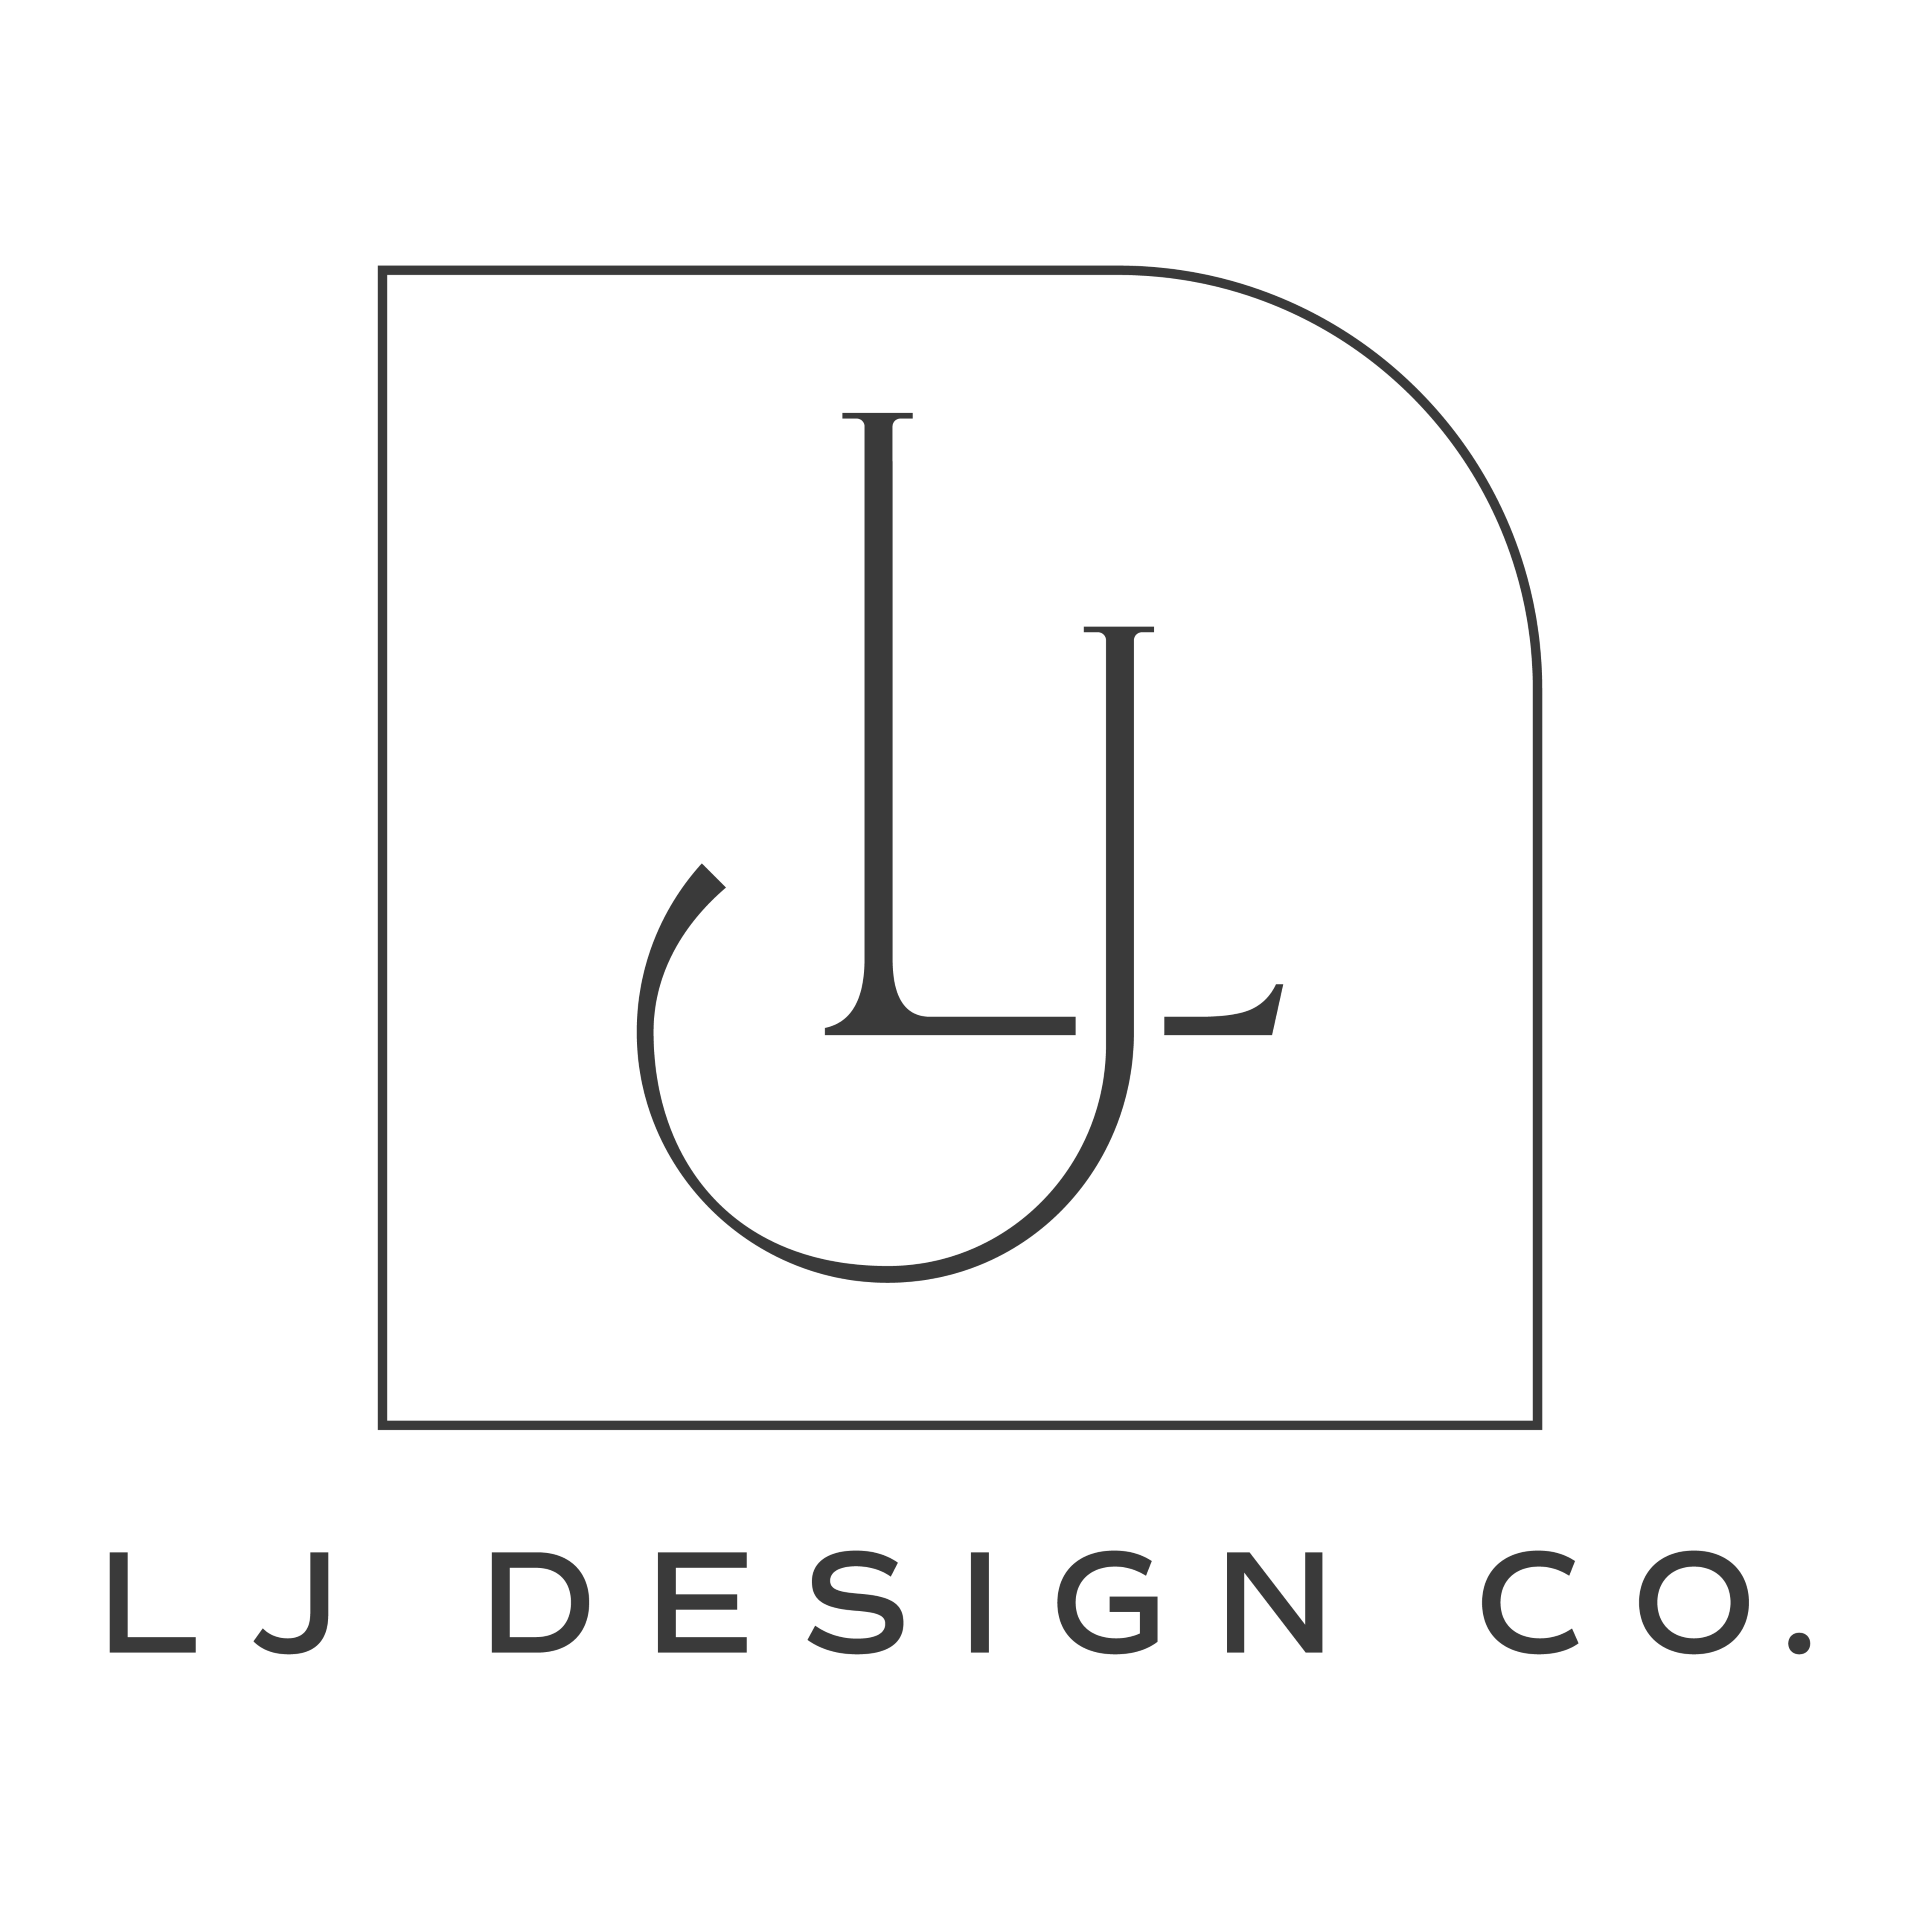 LJ Design Company